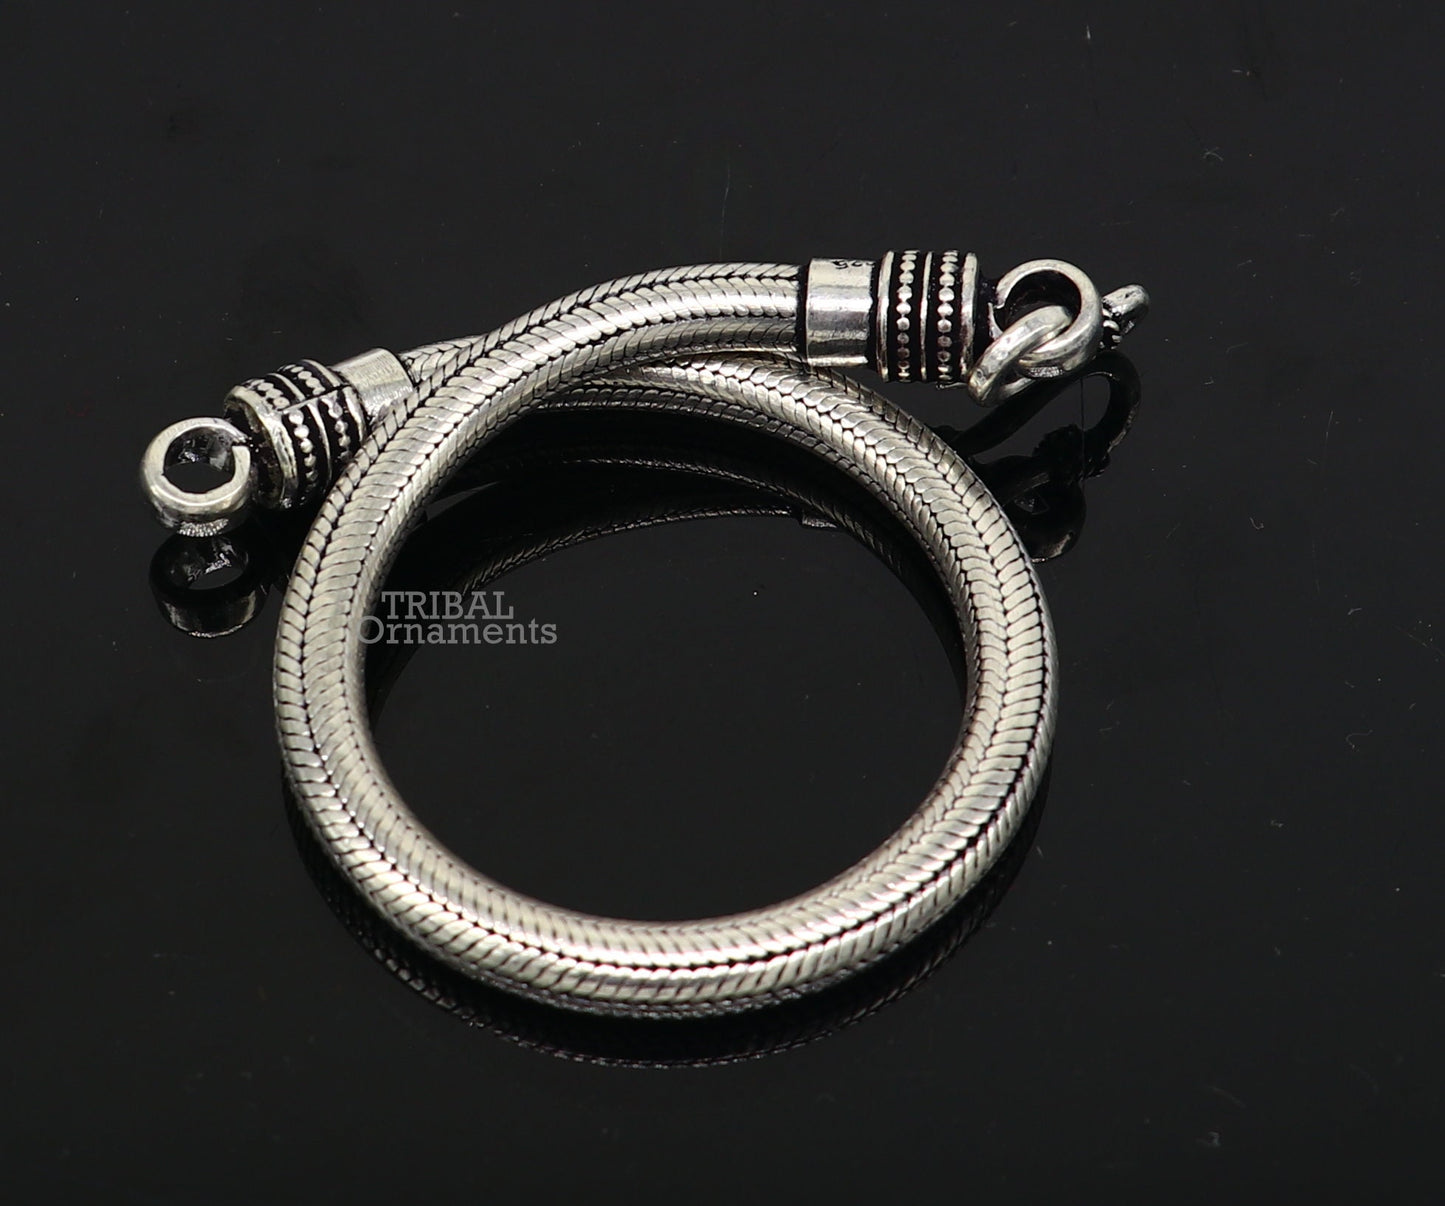 6MM Solid 925 sterling silver handmade amazing snake chain flexible unisex bracelet jewelry elegant custom wrist belt bracelet india sb371 - TRIBAL ORNAMENTS